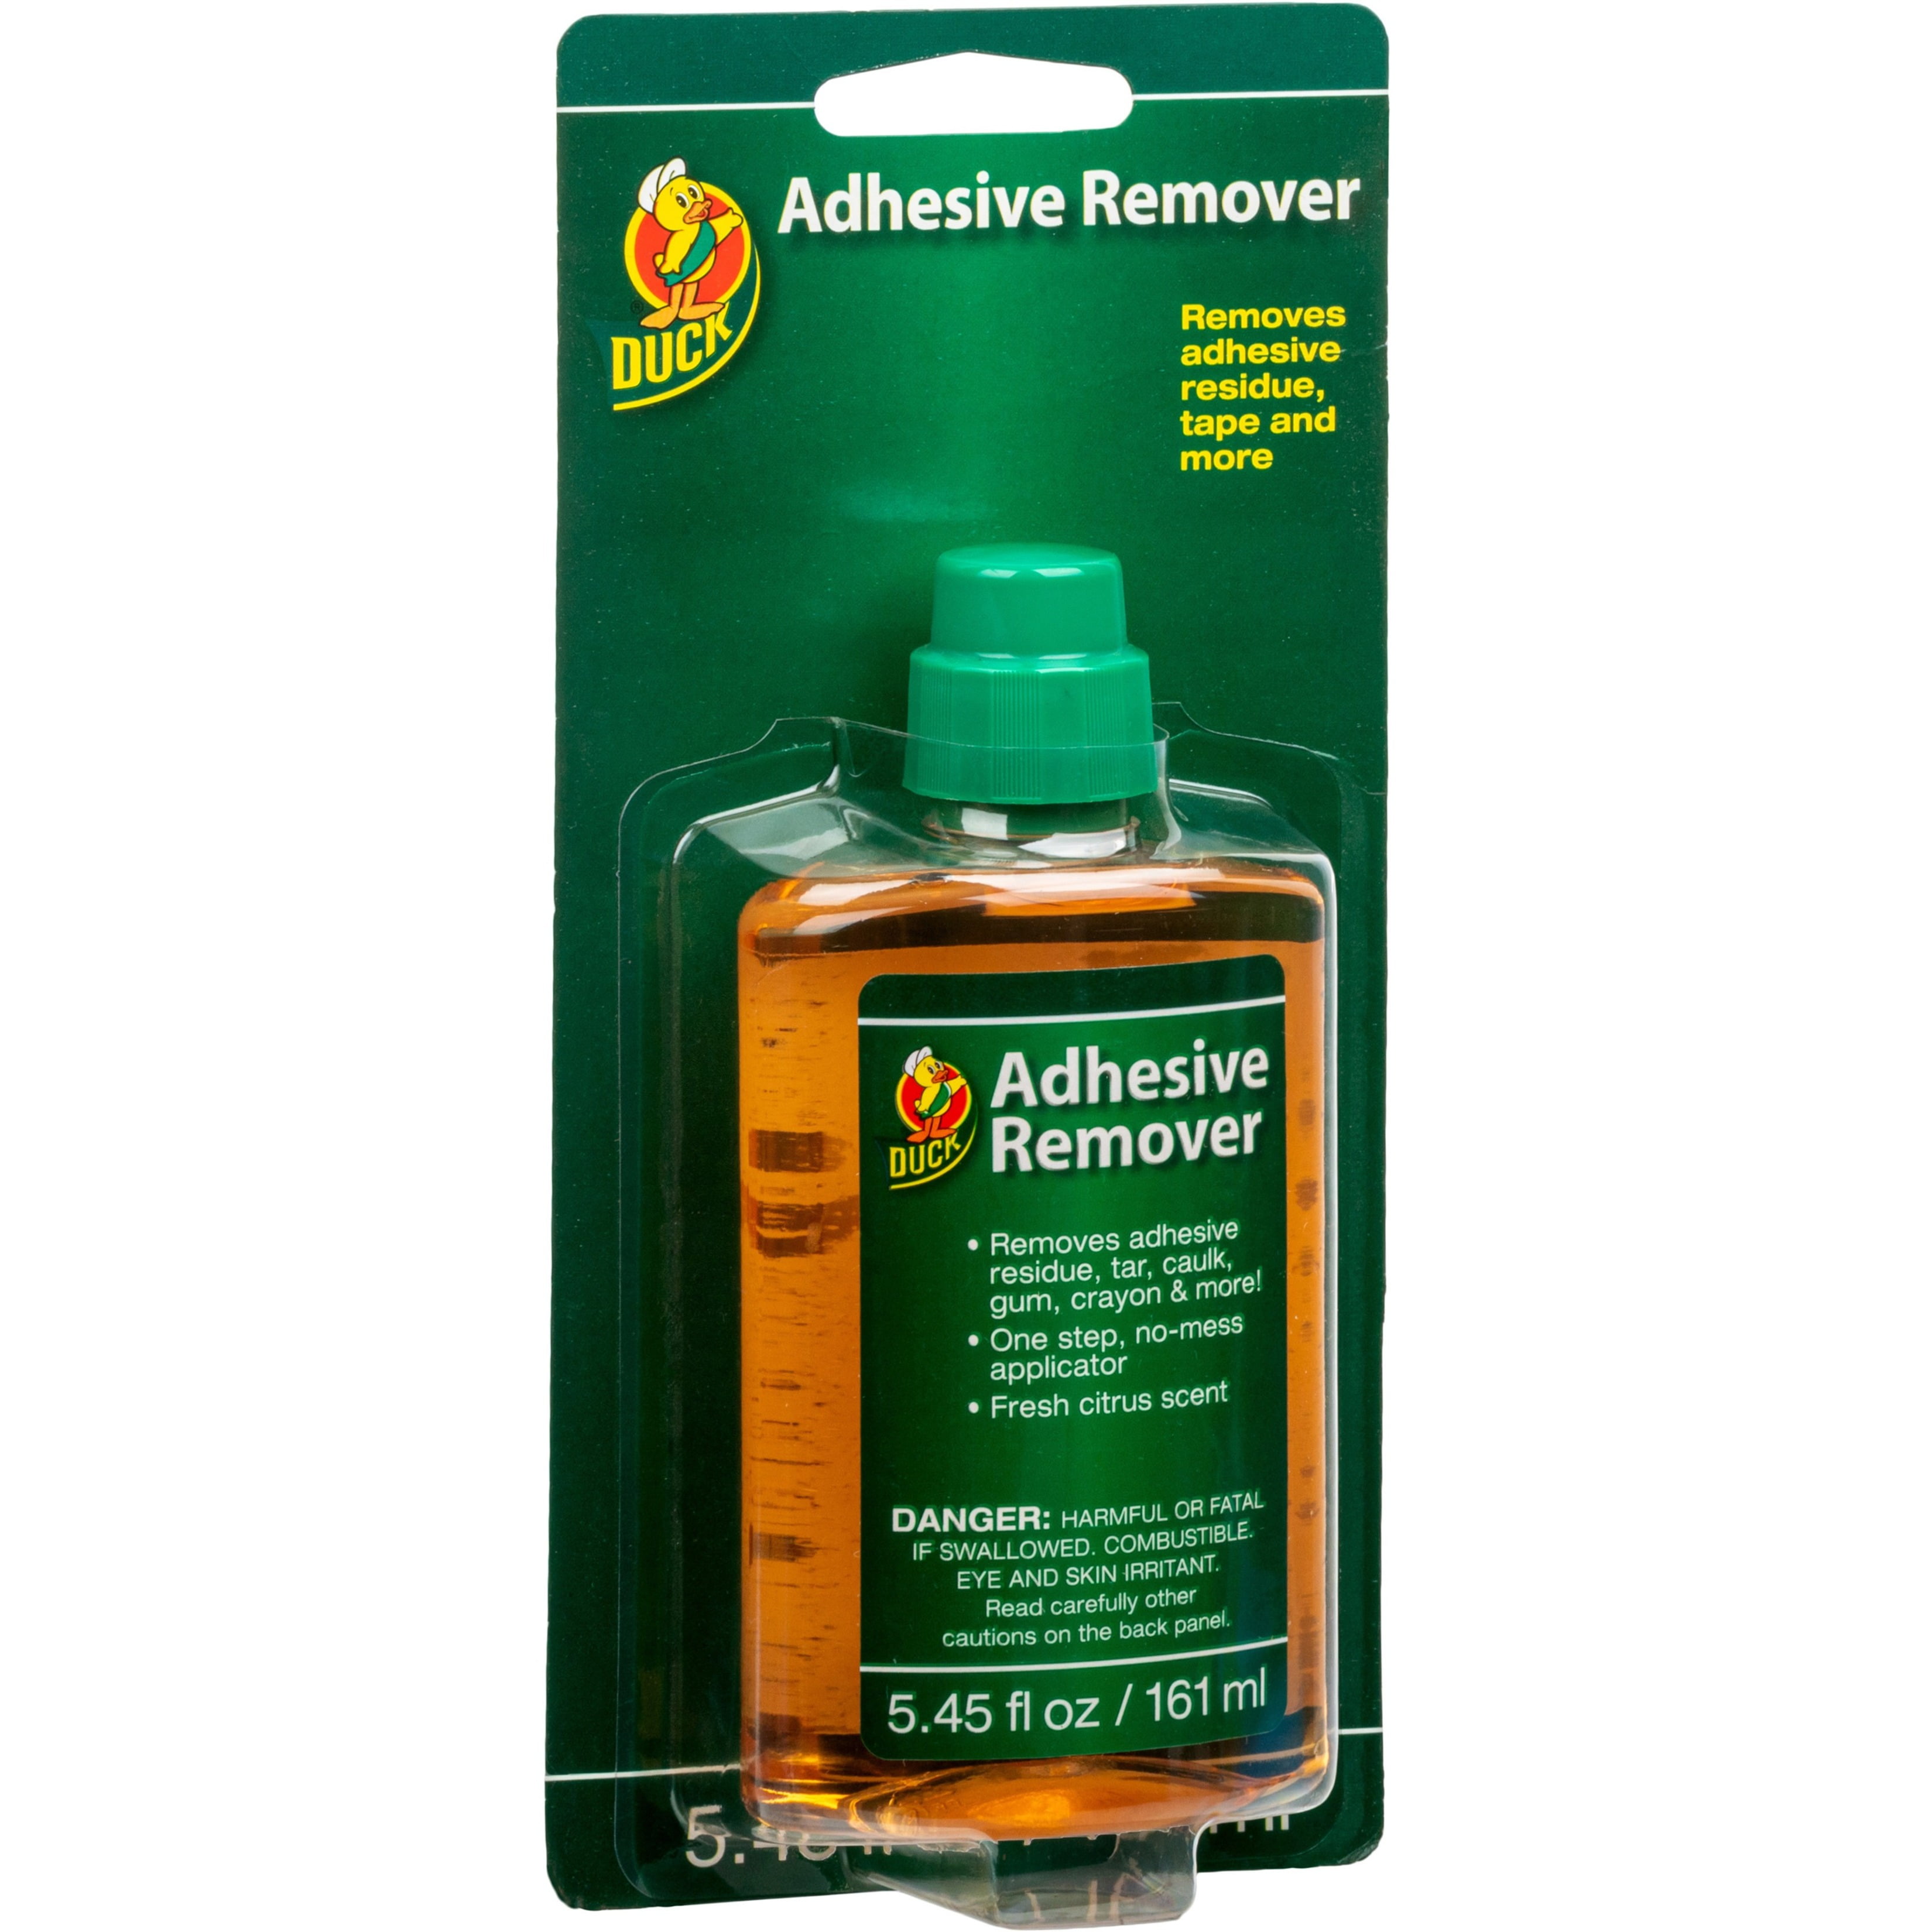 BX/1 - Brava Adhesive Remover Spray 1.7 oz. Bottle - Best Buy